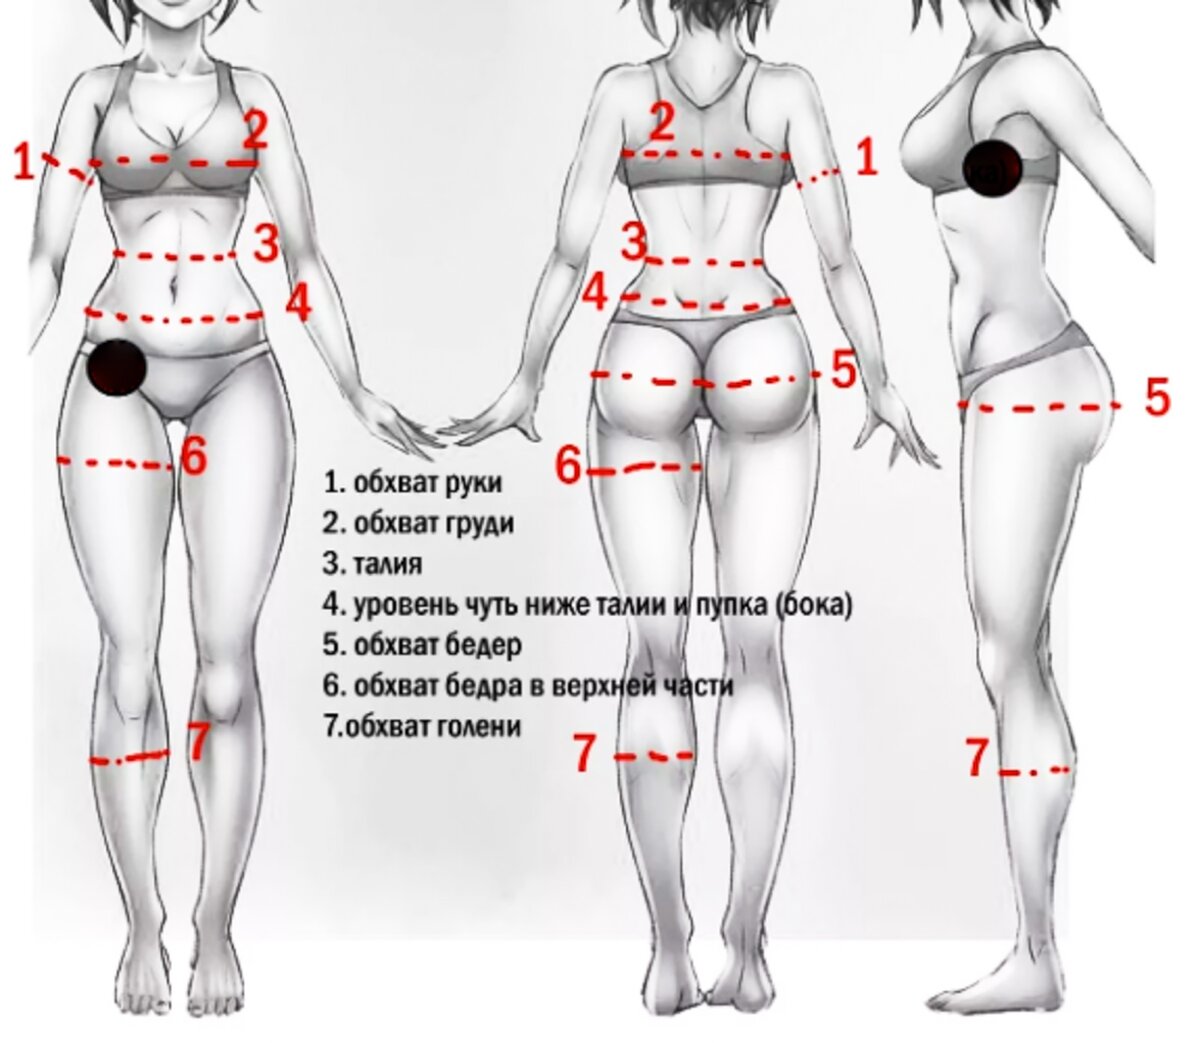 средний обхват груди у женщин фото 48